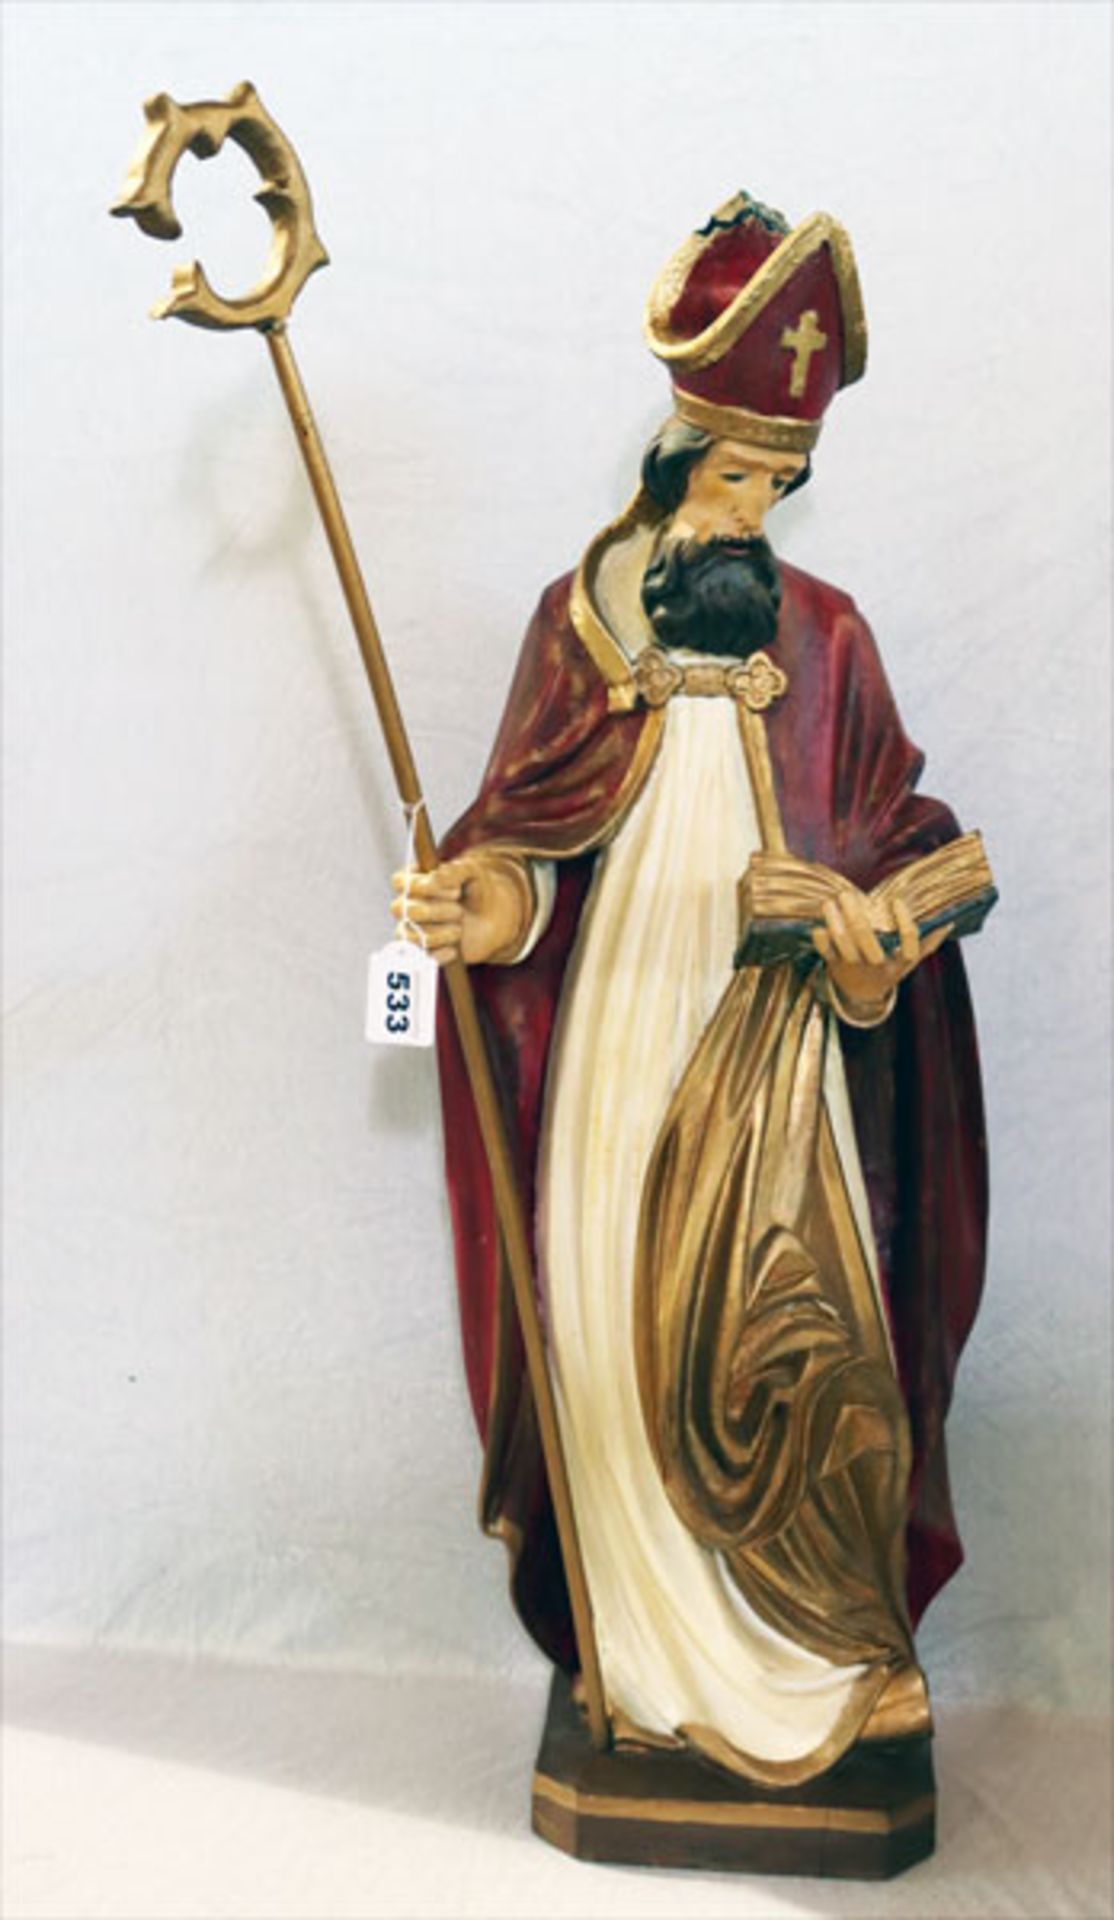 Holz Skulptur 'Heiliger Nikolaus', farbitg gefaßt, Mitra beschädigt, Farbalösungen, teils